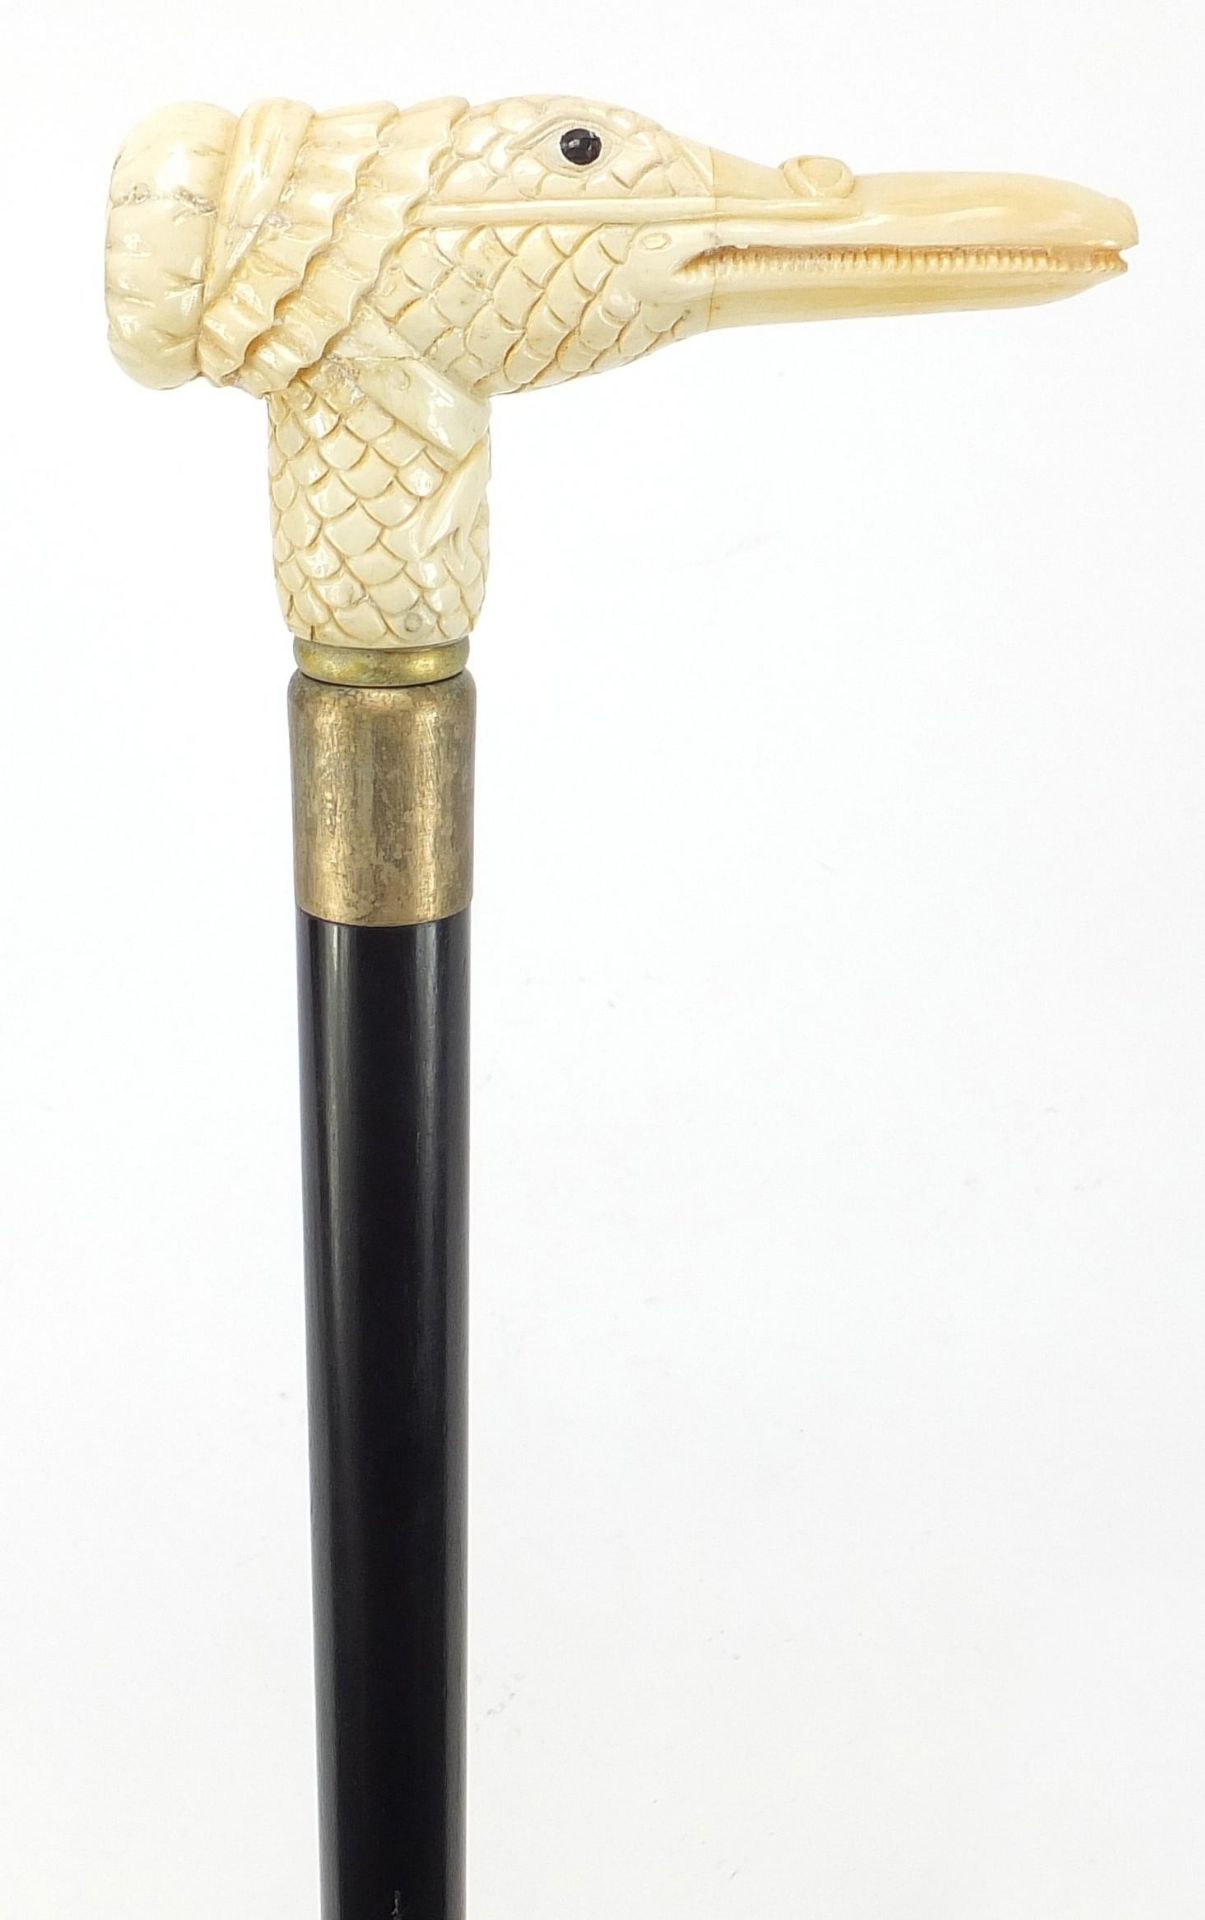 Hardwood walking stick with carved bone duck design handle, 91.5cm in length : - Image 2 of 6